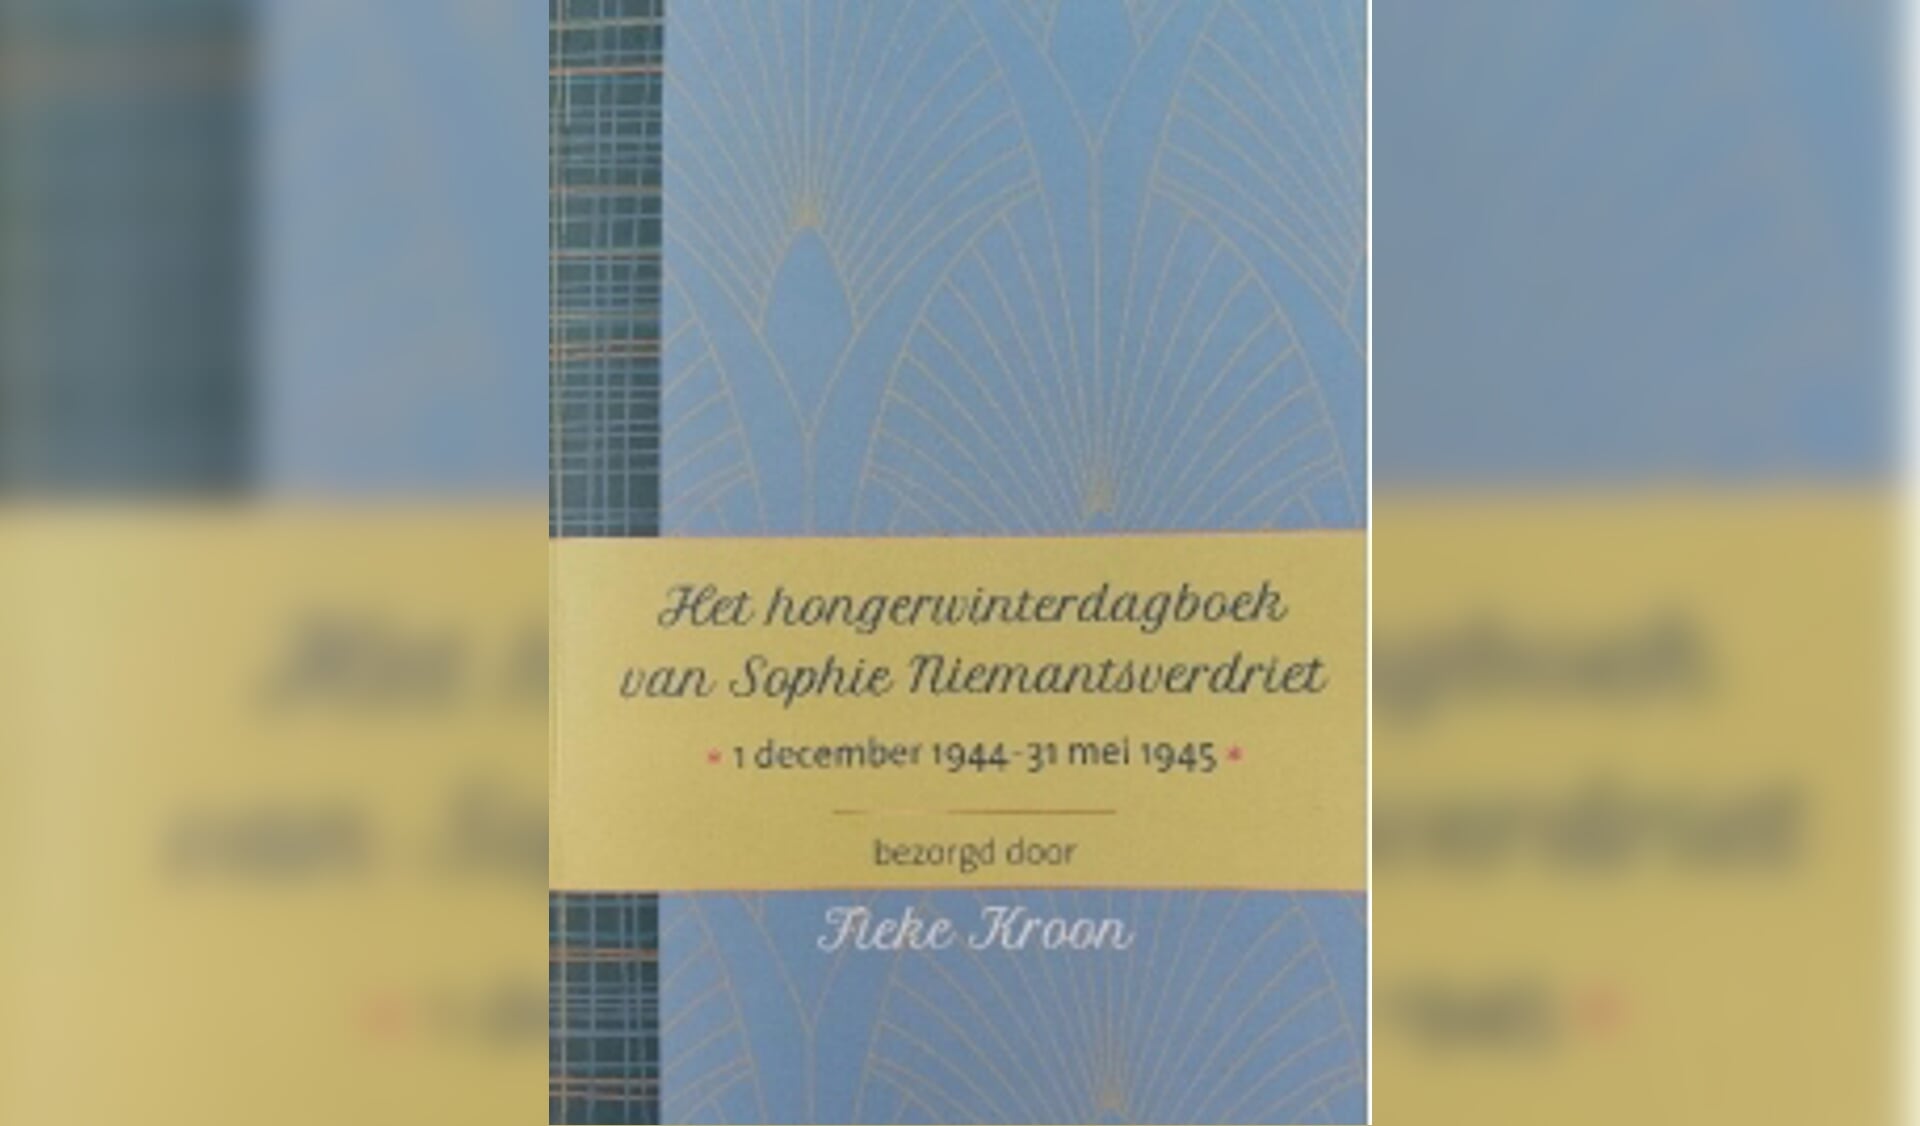 Het hongerwinterdagboek van Sophie Niemantsverdriet.